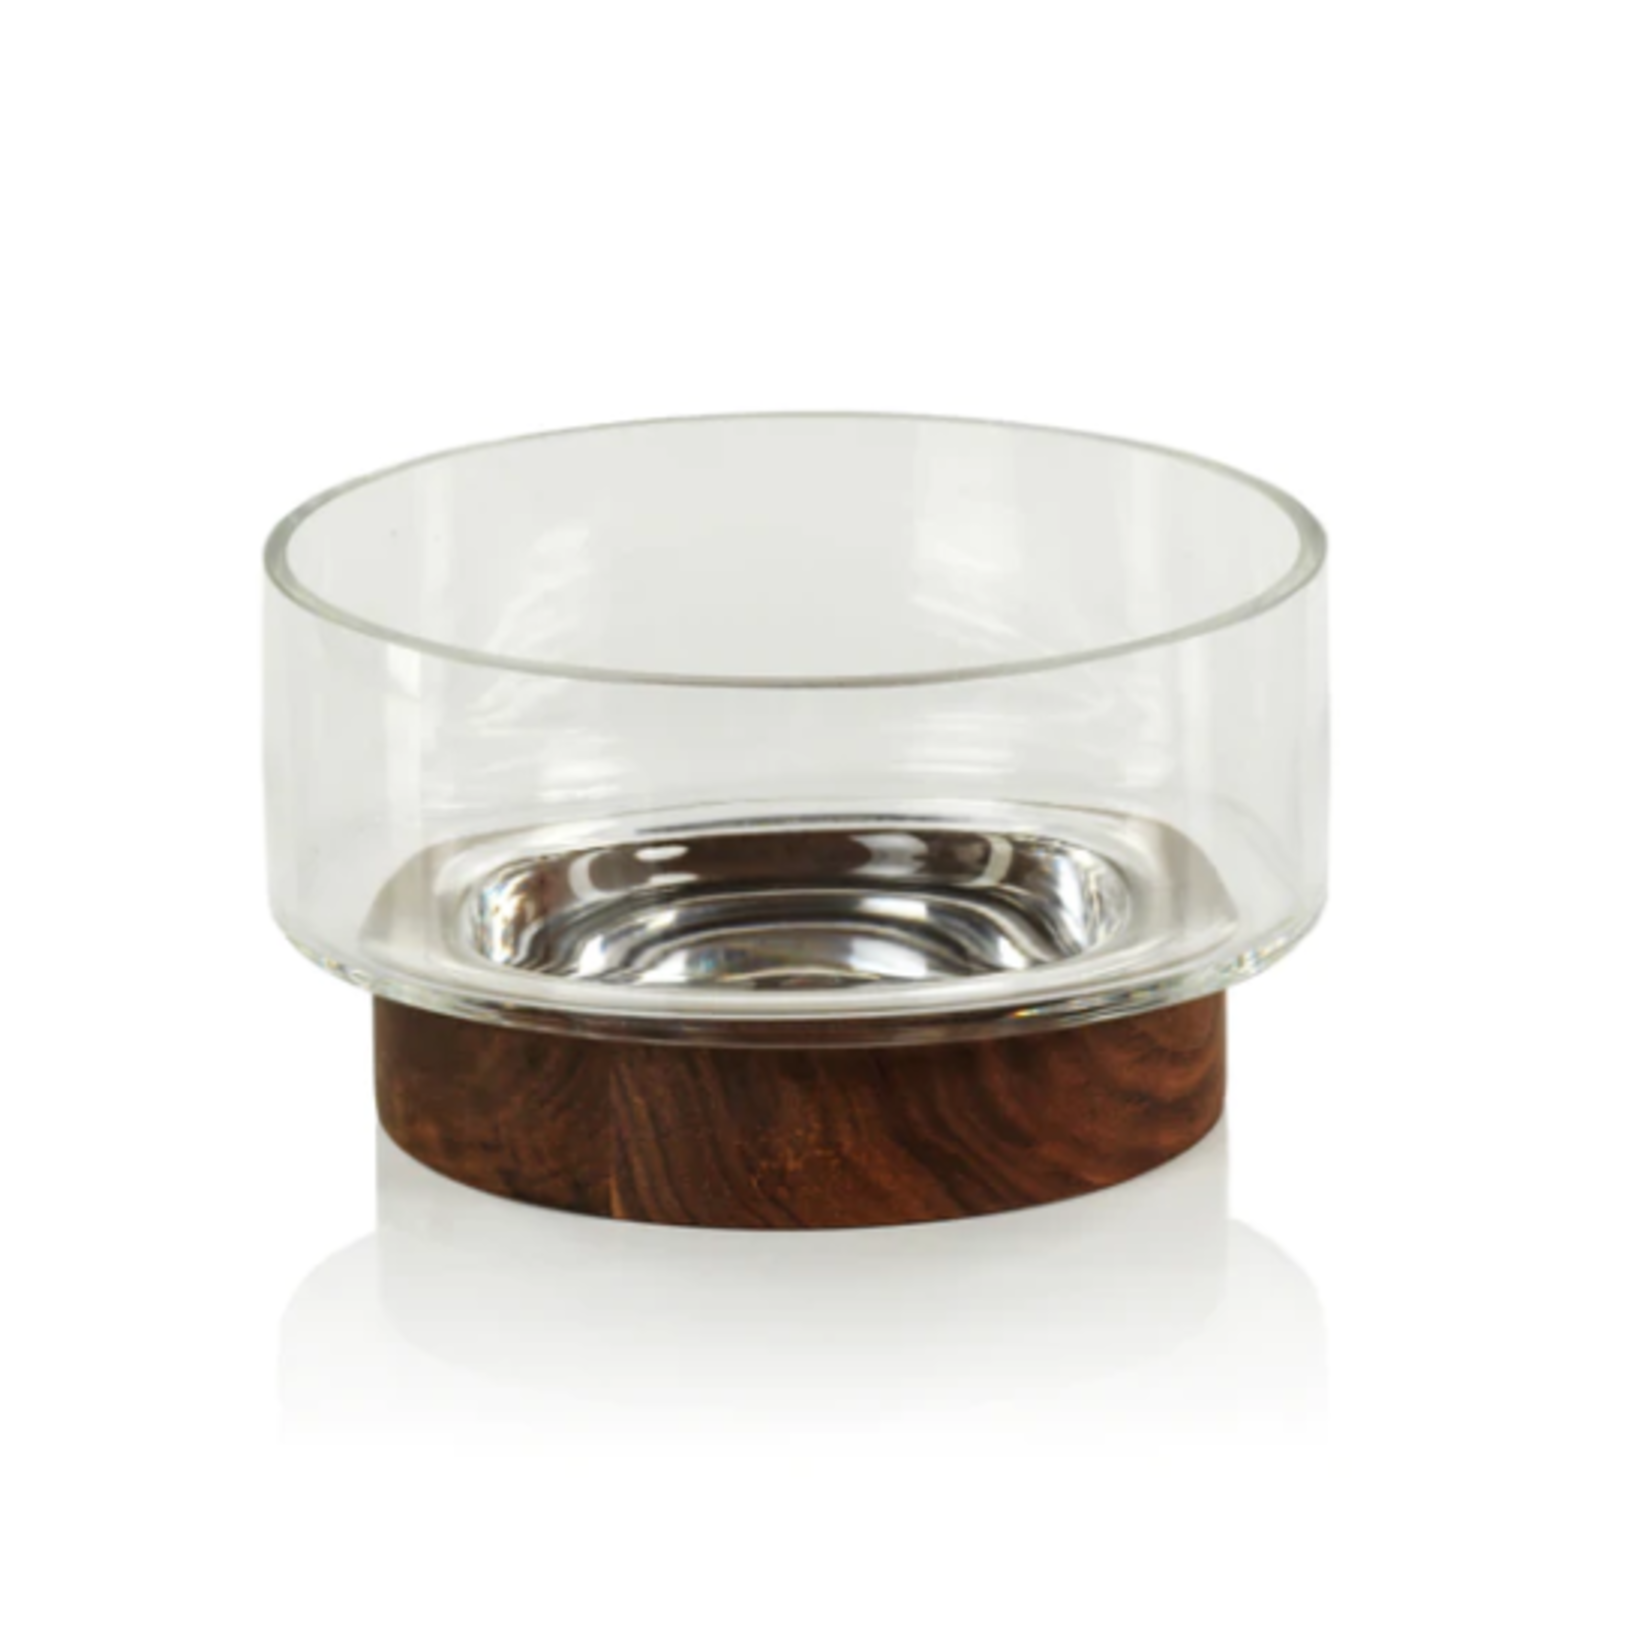 Zodax Glass Bowl on Wood Base-Small